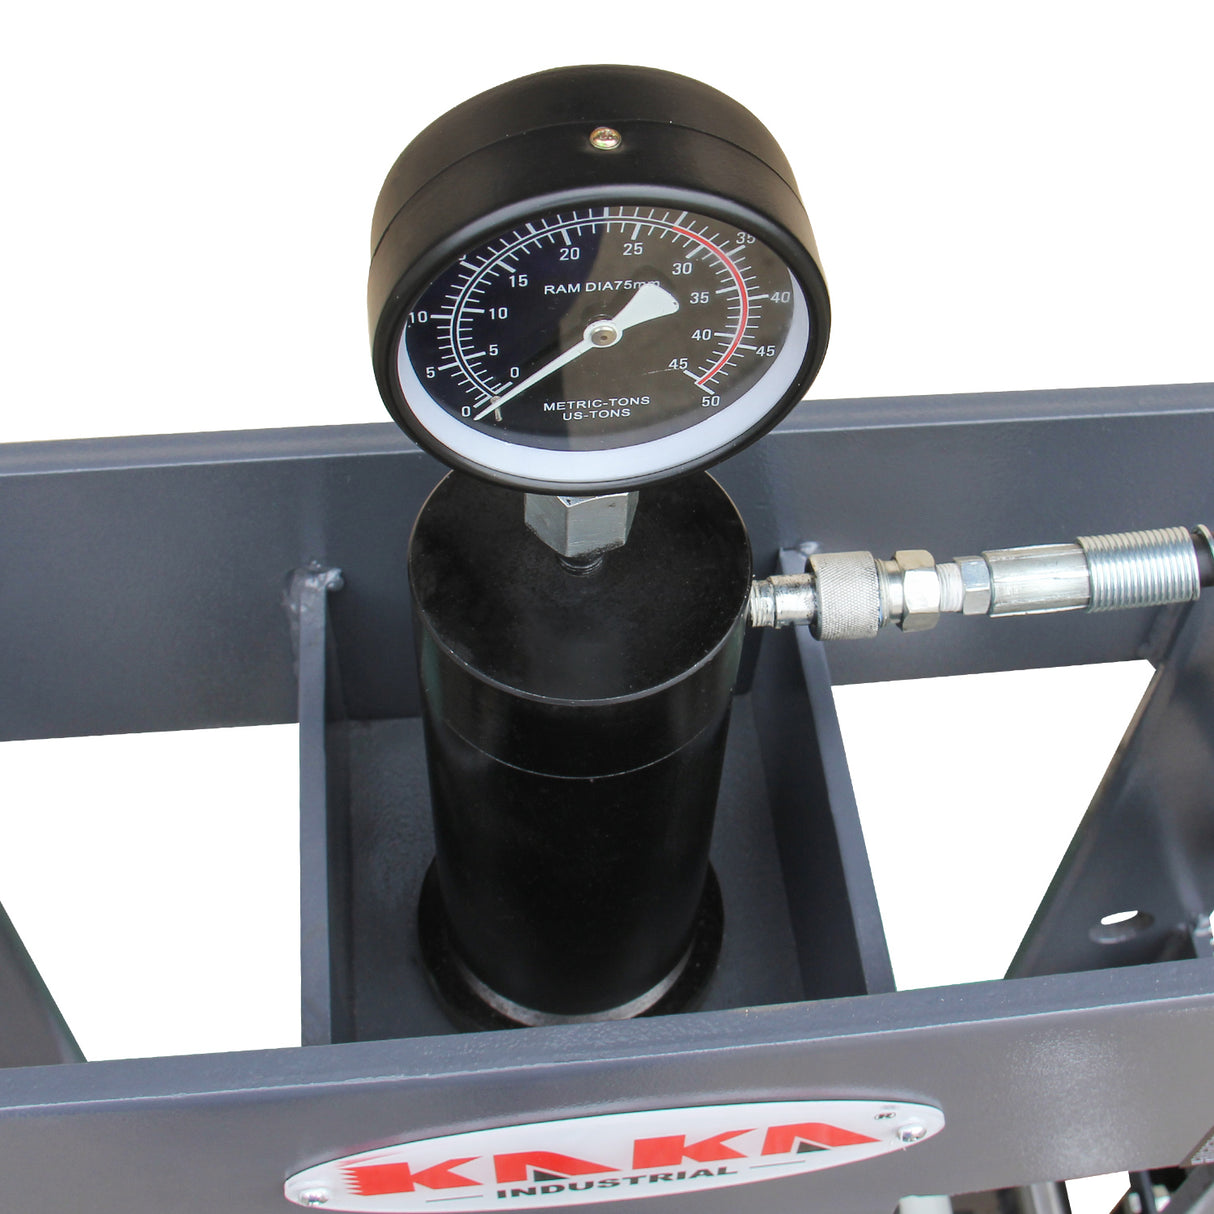 KAKA Indsutrial  HP-25S Hydraulic Manual Pump, H-Frame Frame, 25 ton Frame Capacity, 10 in Stroke